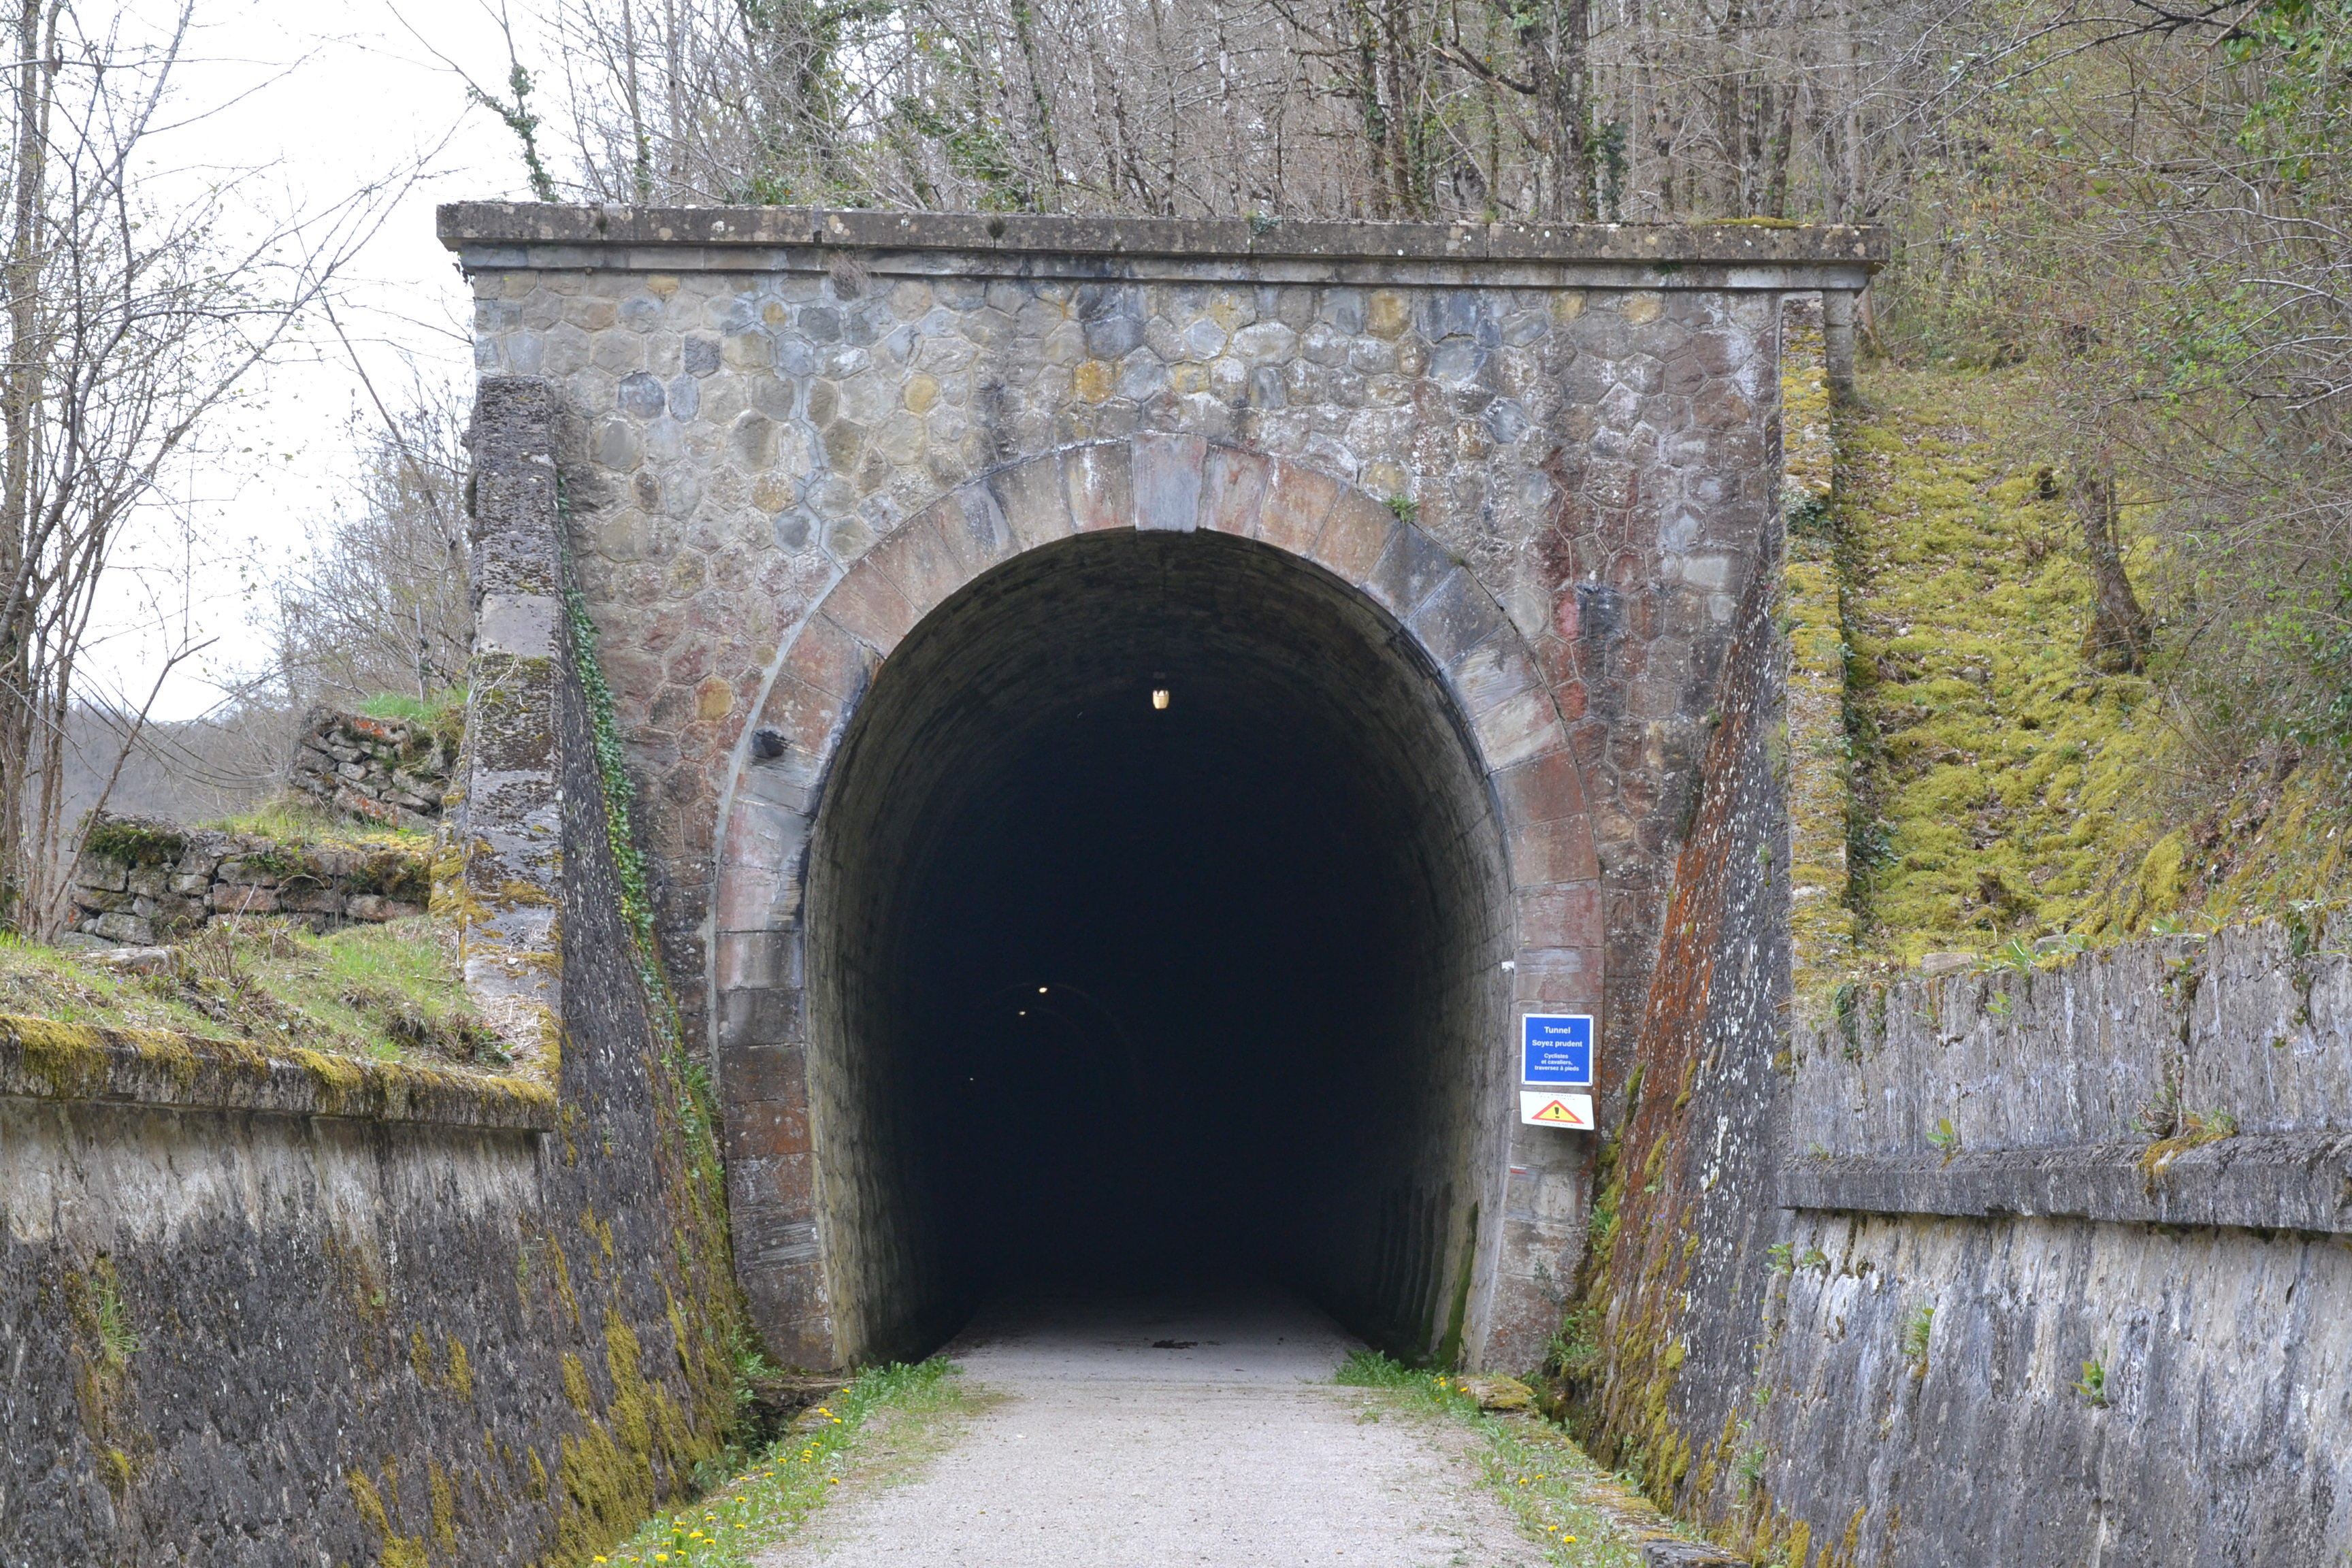 Tunel de san isidro valencia donde esta